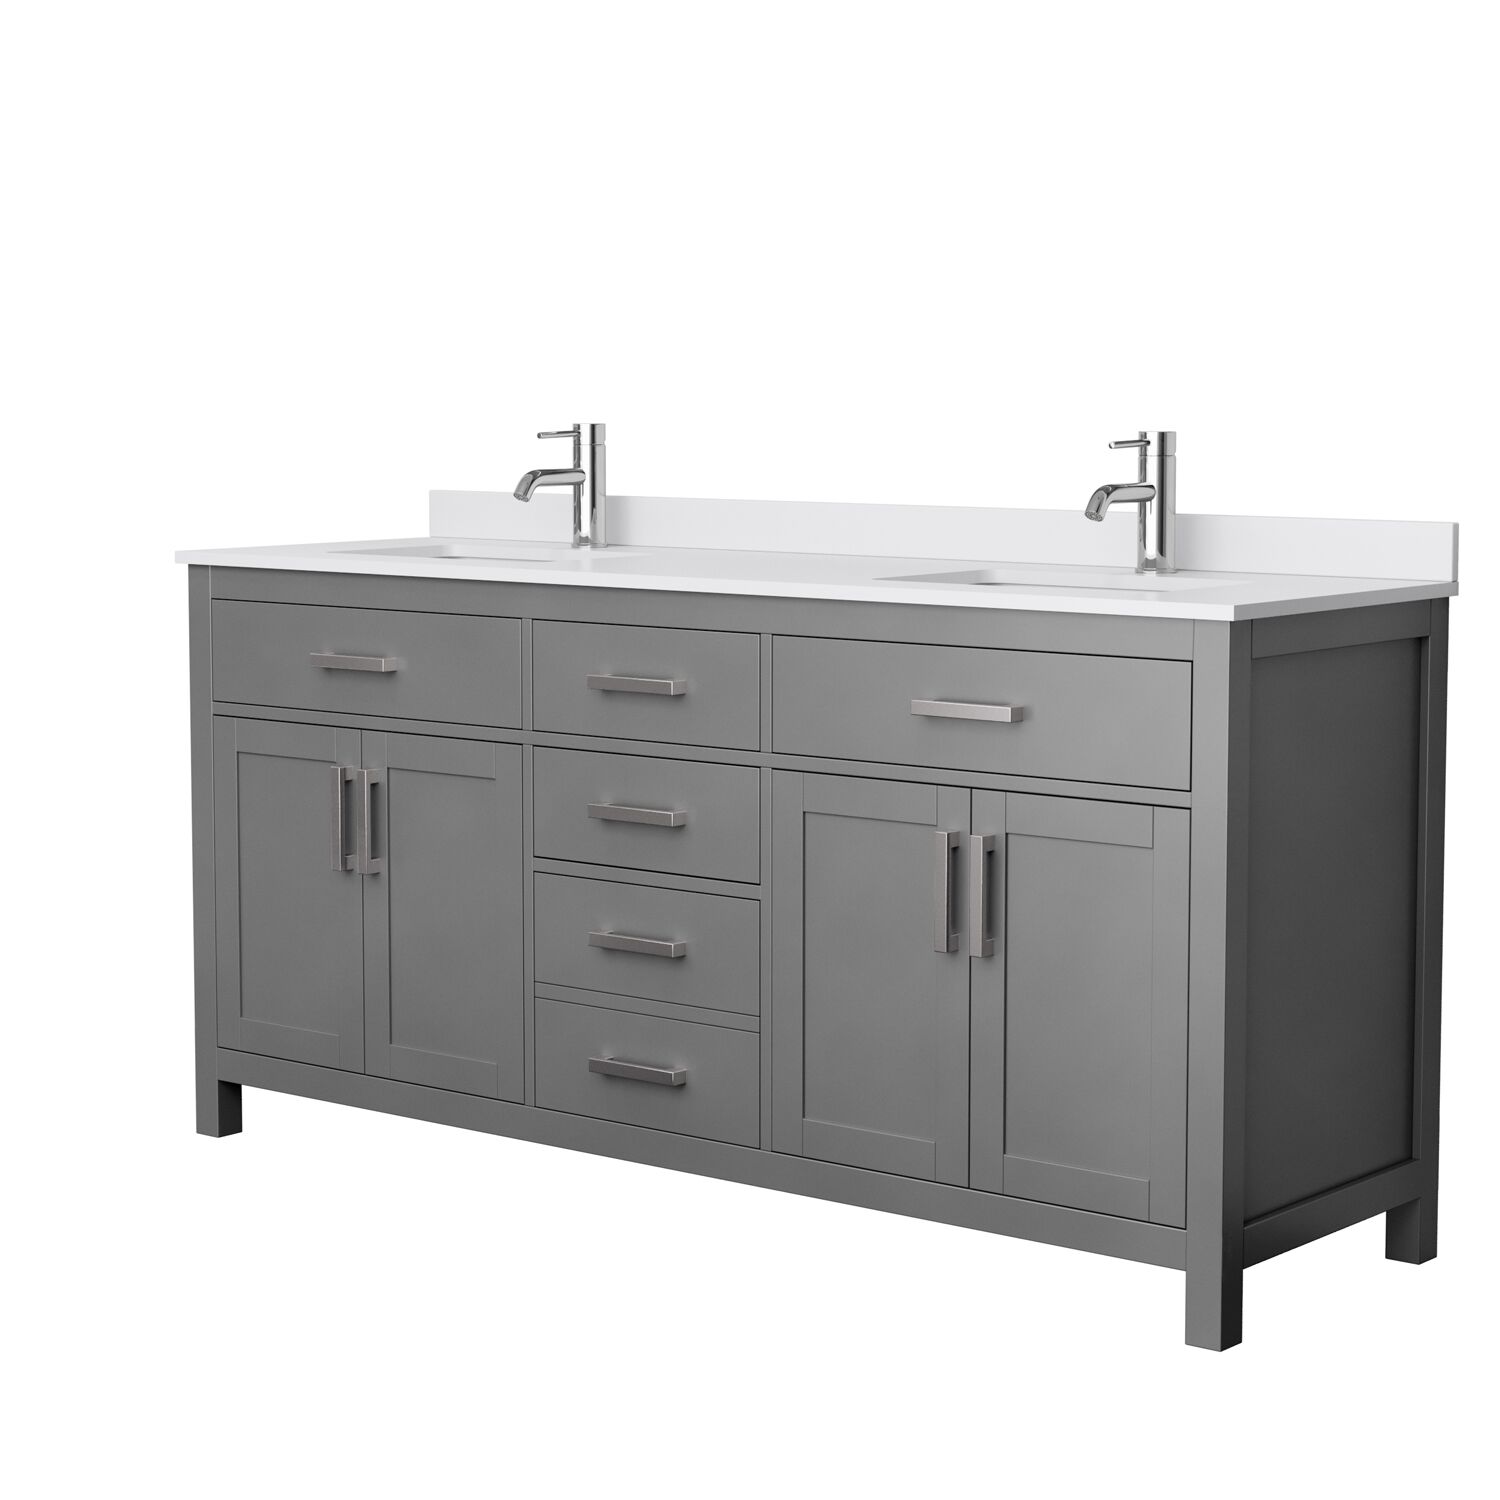 72" Double Bathroom Vanity in Dark Gray, White Cultured Marble Countertop, Undermount Square Sinks, No Mirror